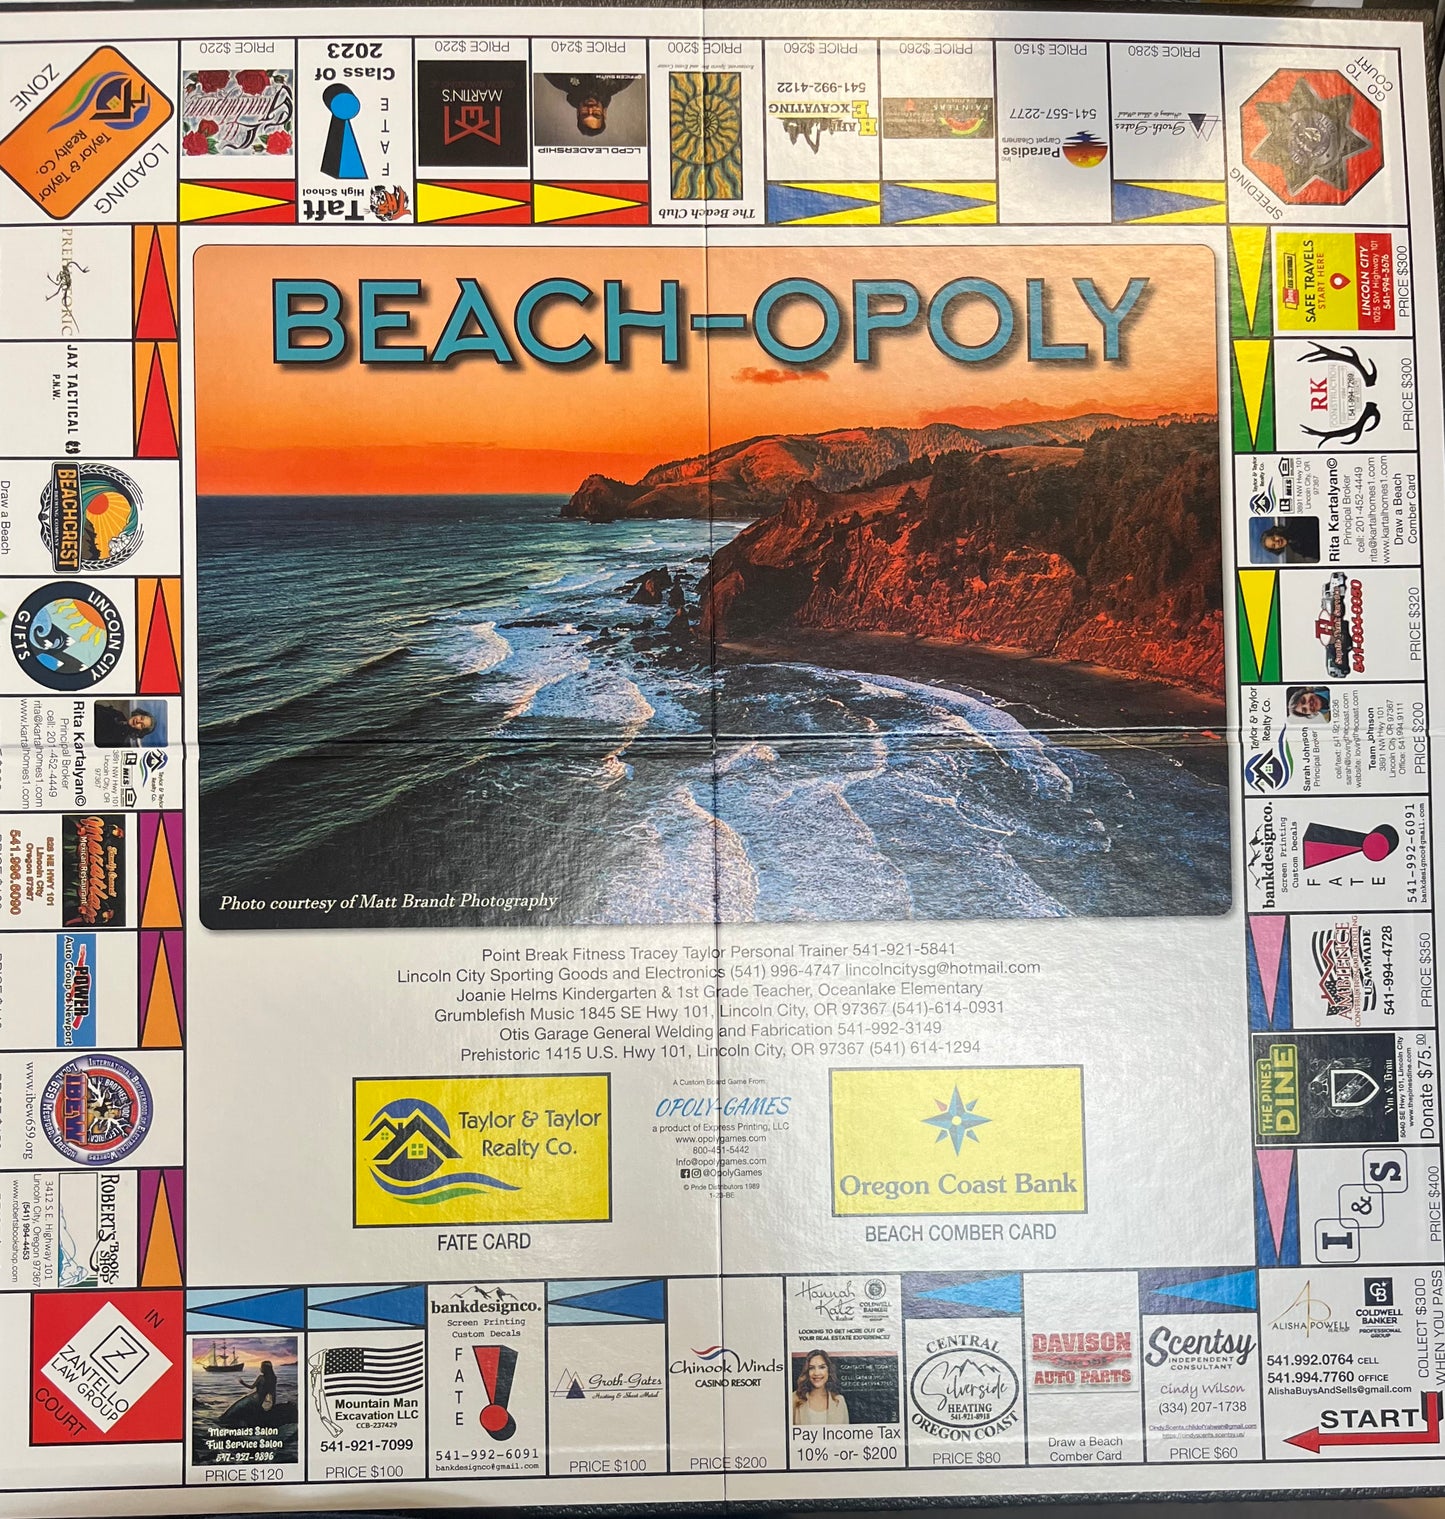 BEACH-OPOLY